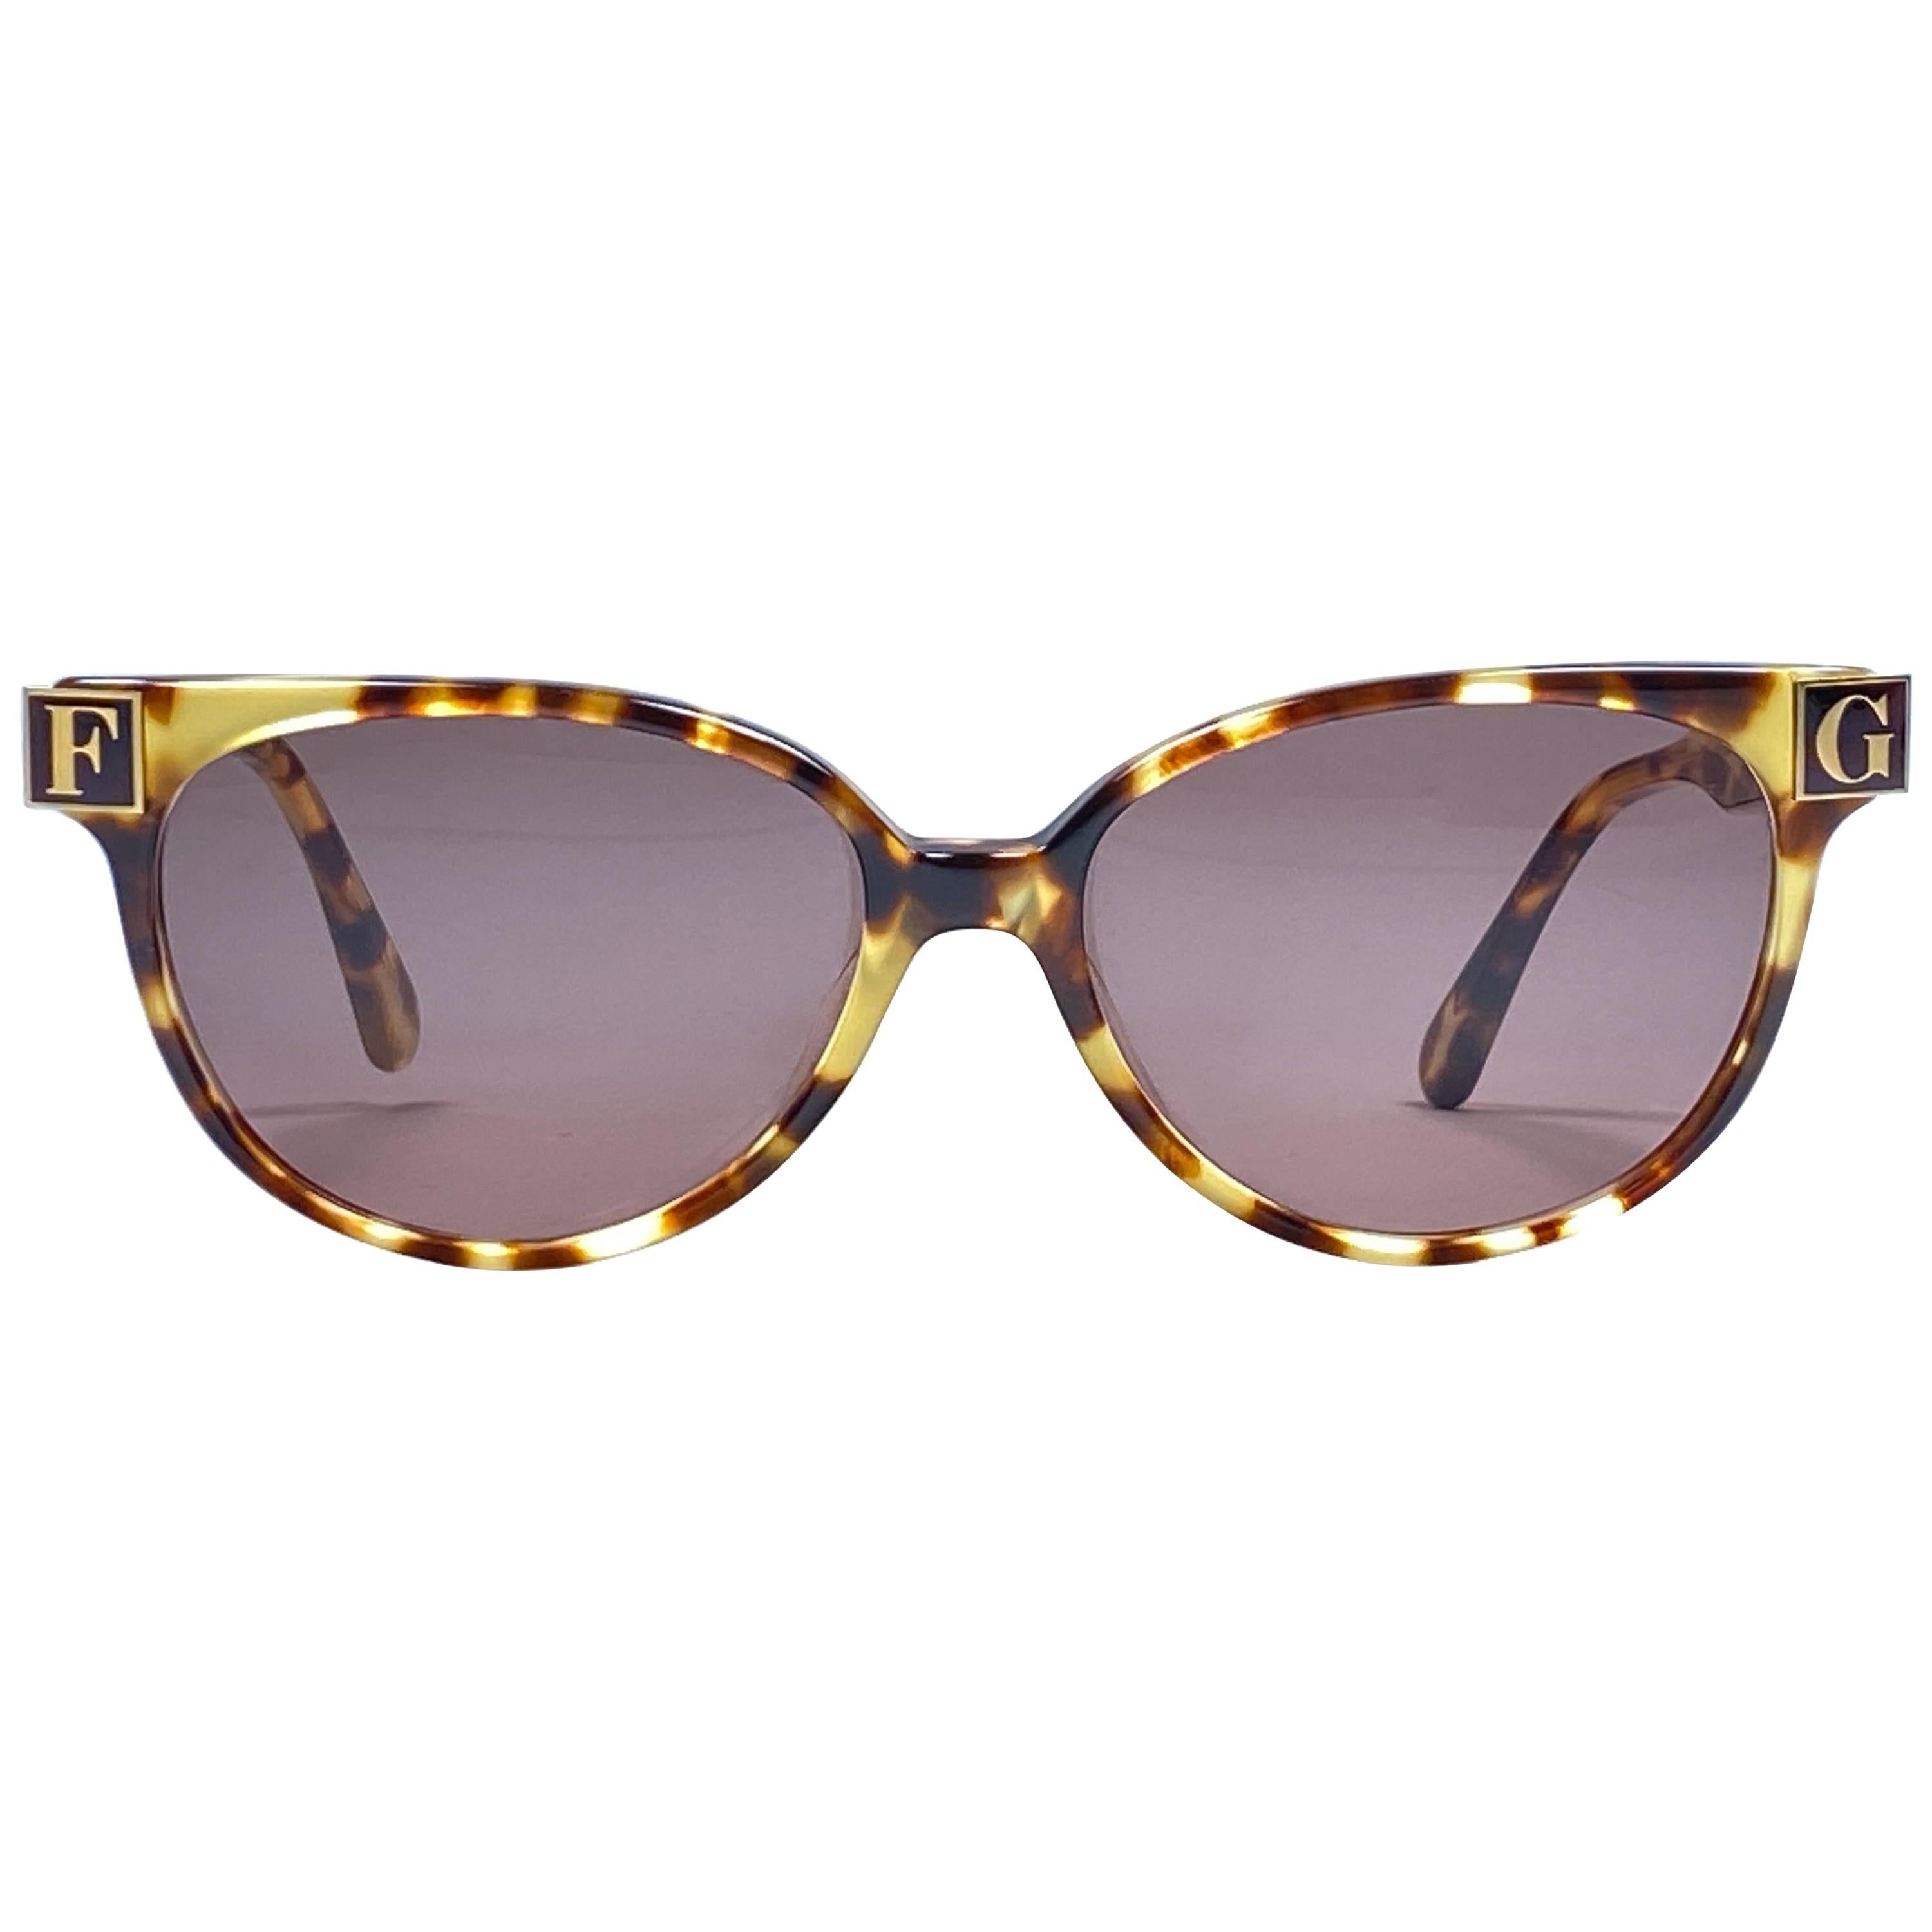 New Vintage Gianfranco Ferré GFF 106 Gold / Light Tortoise 1990 Italy Sunglasses